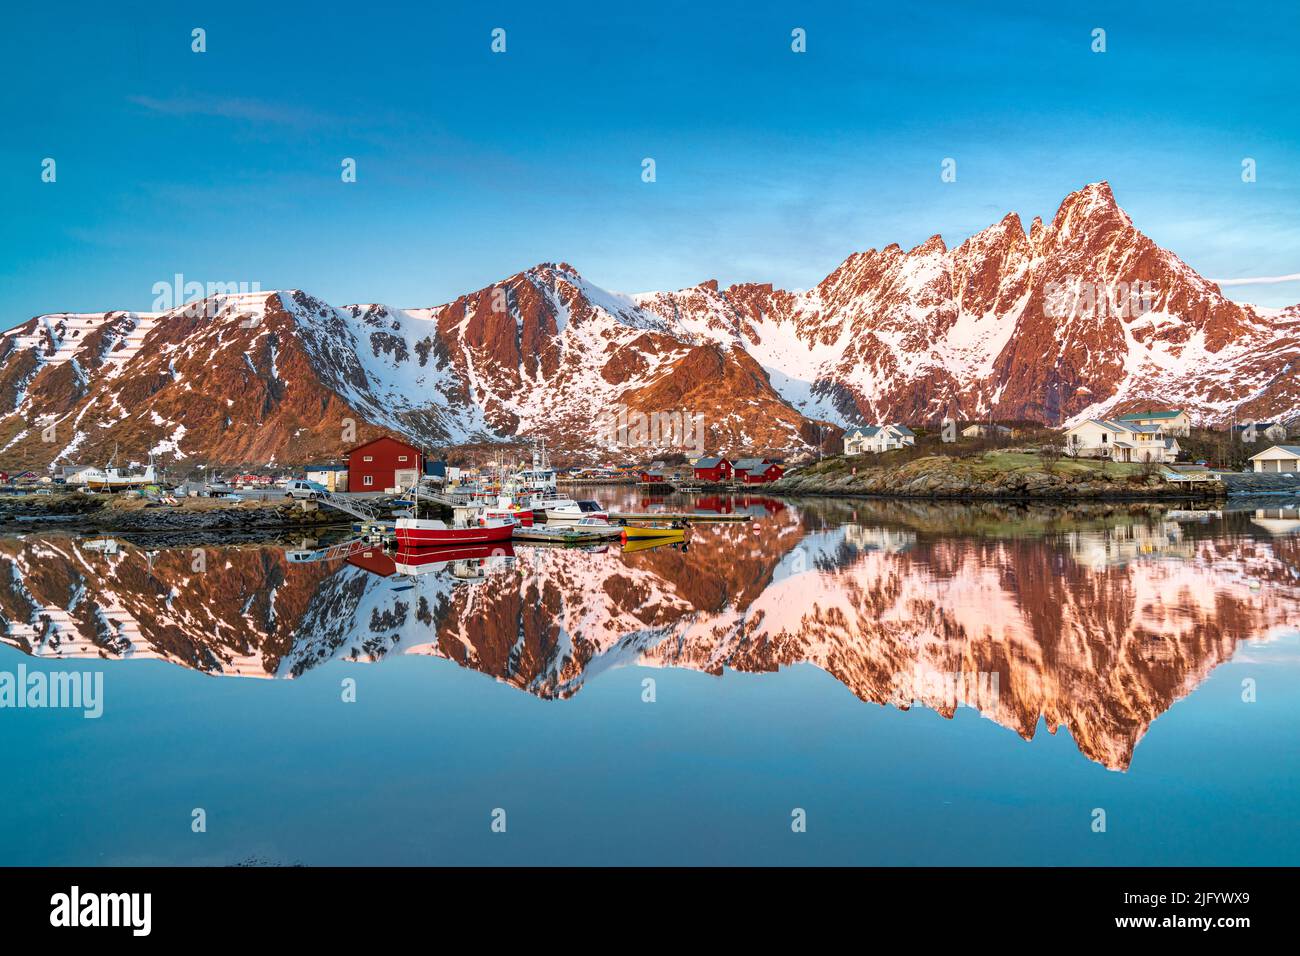 Berge, die sich bei Sonnenaufgang im kalten Meer spiegeln, Ballstad, Vestvavoy, Lofoten Islands, Norwegen, Skandinavien, Europa Stockfoto